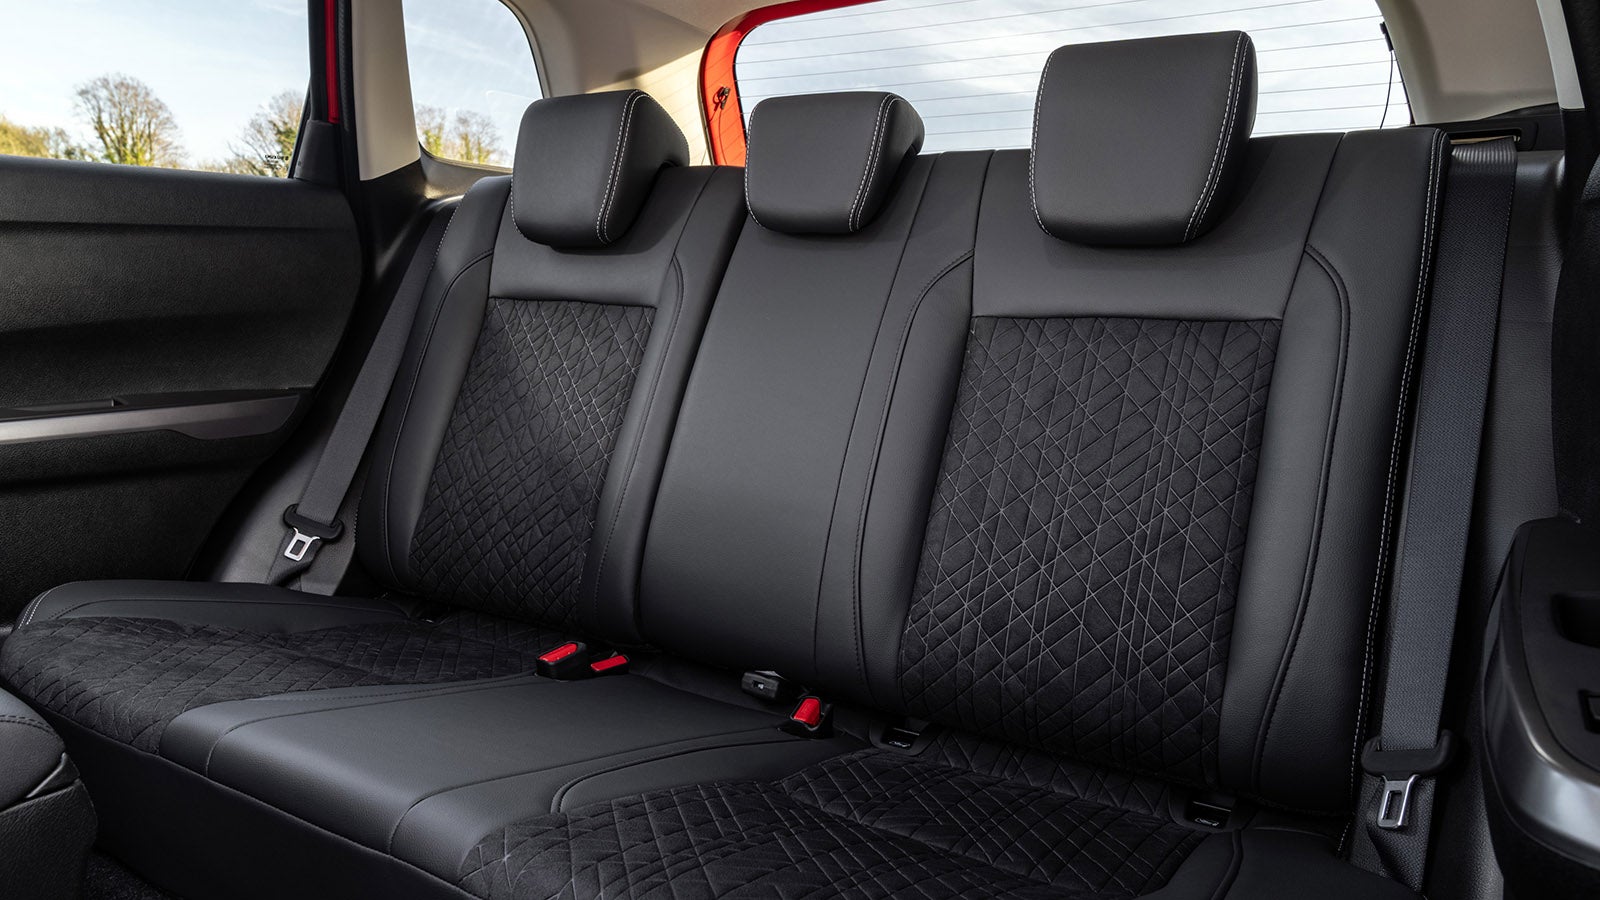 Suzuki Vitara review rear seats